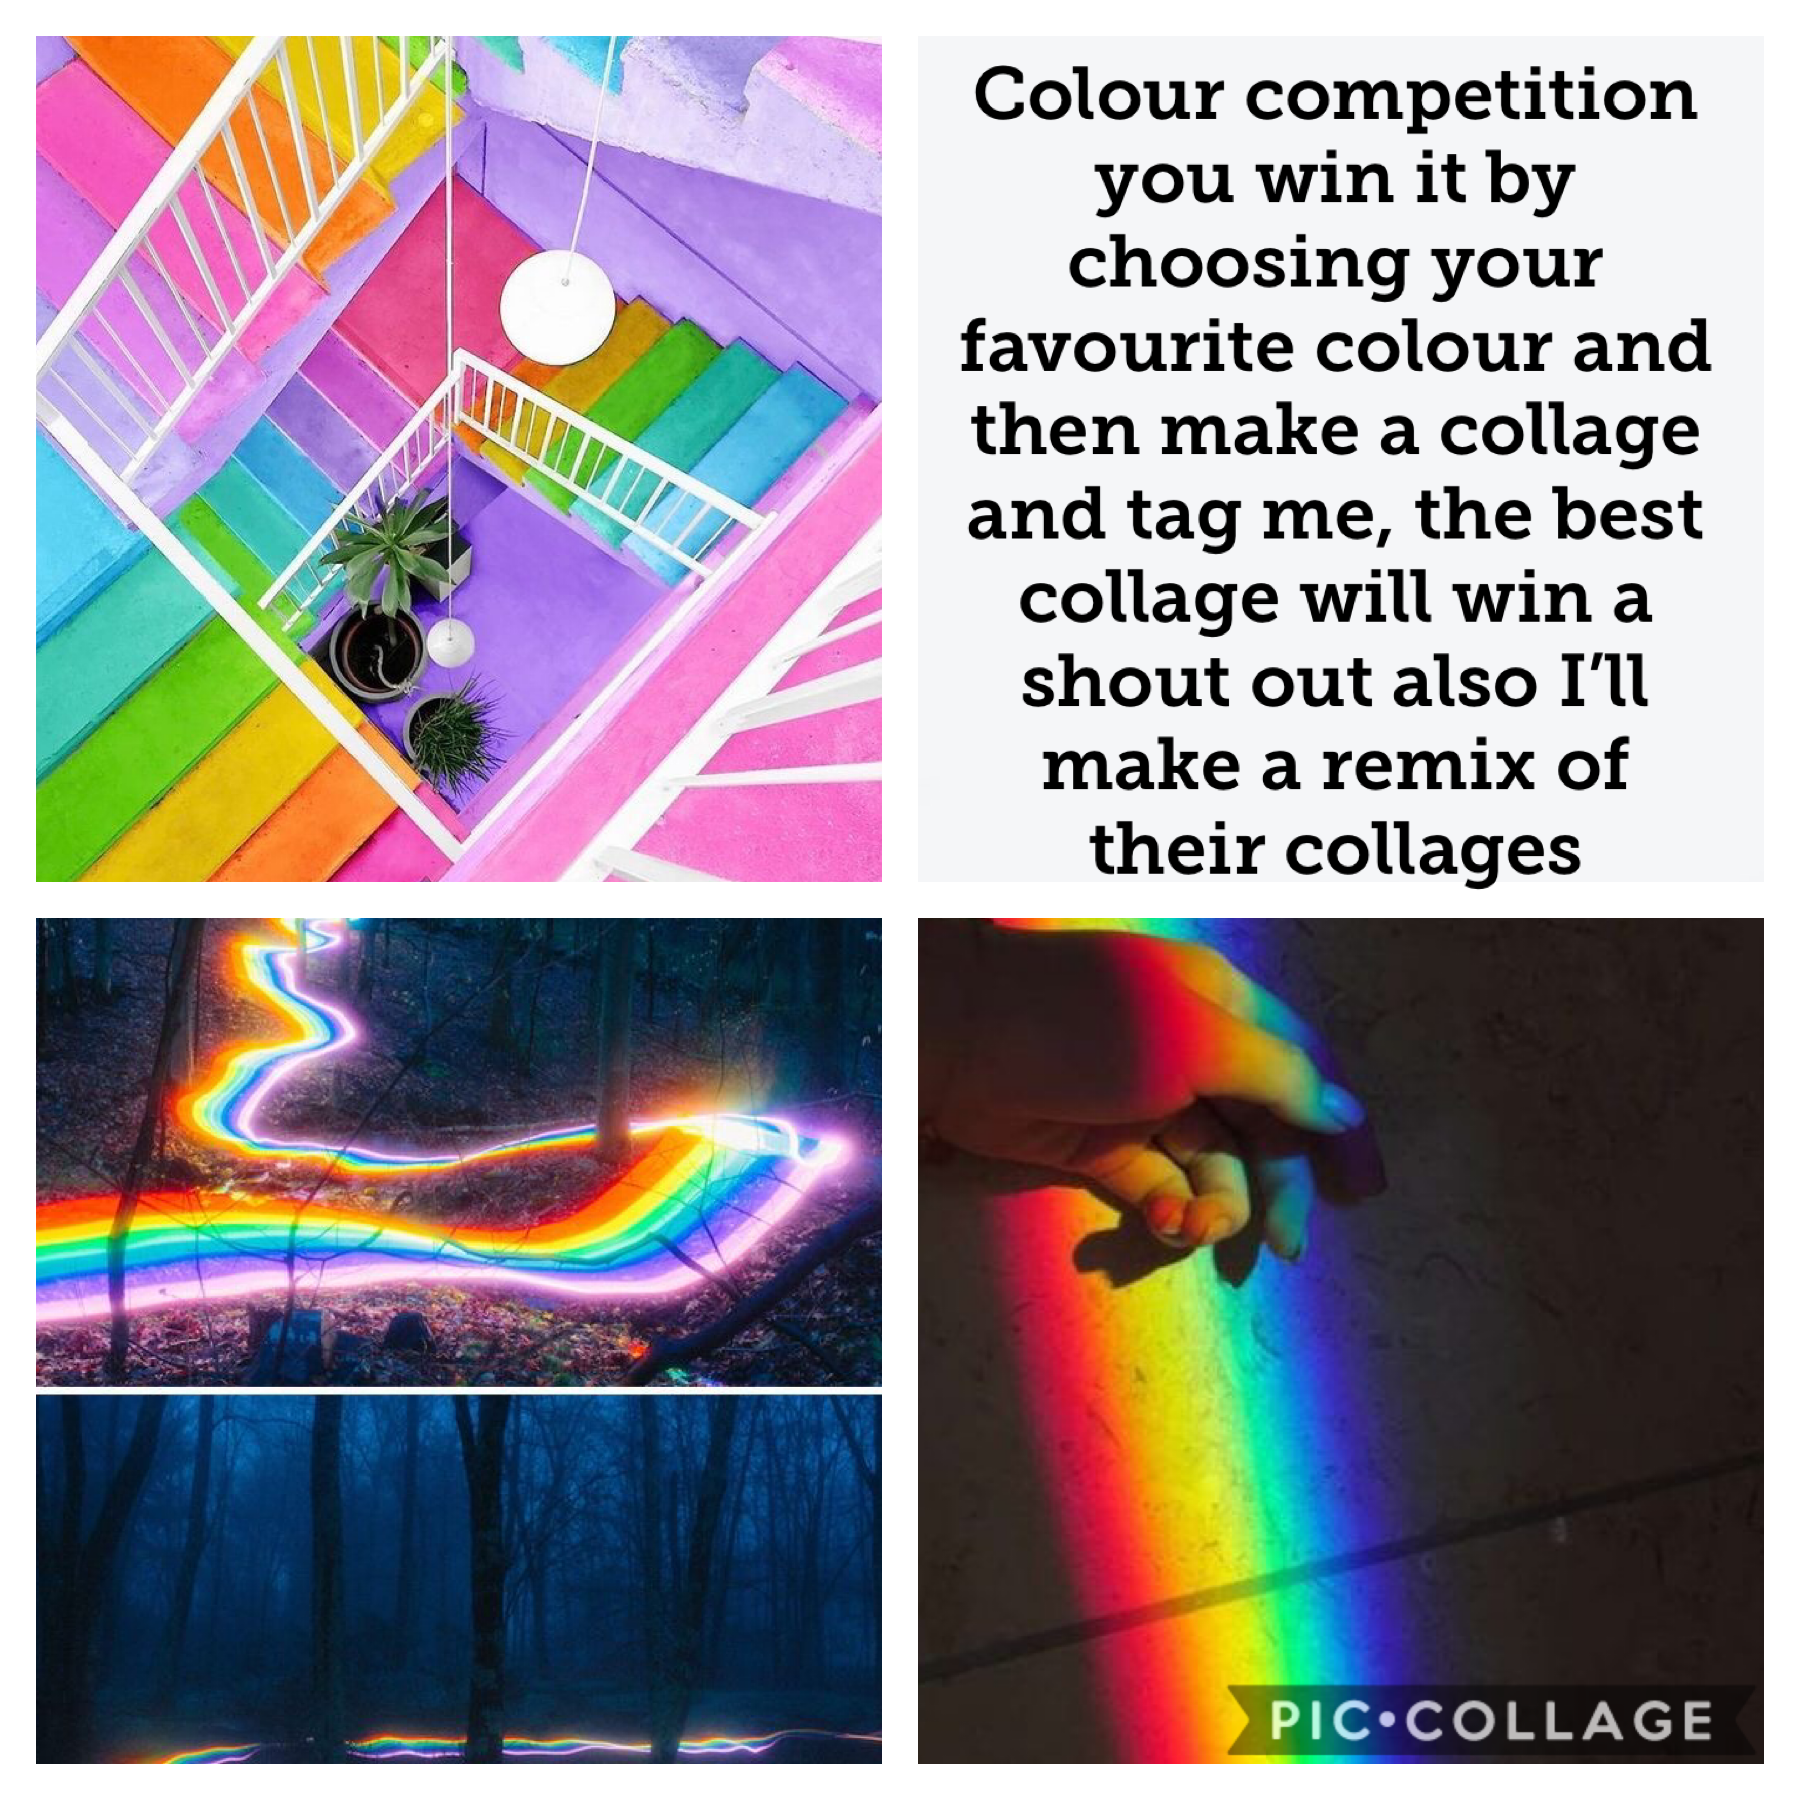 Colour competition, tag me